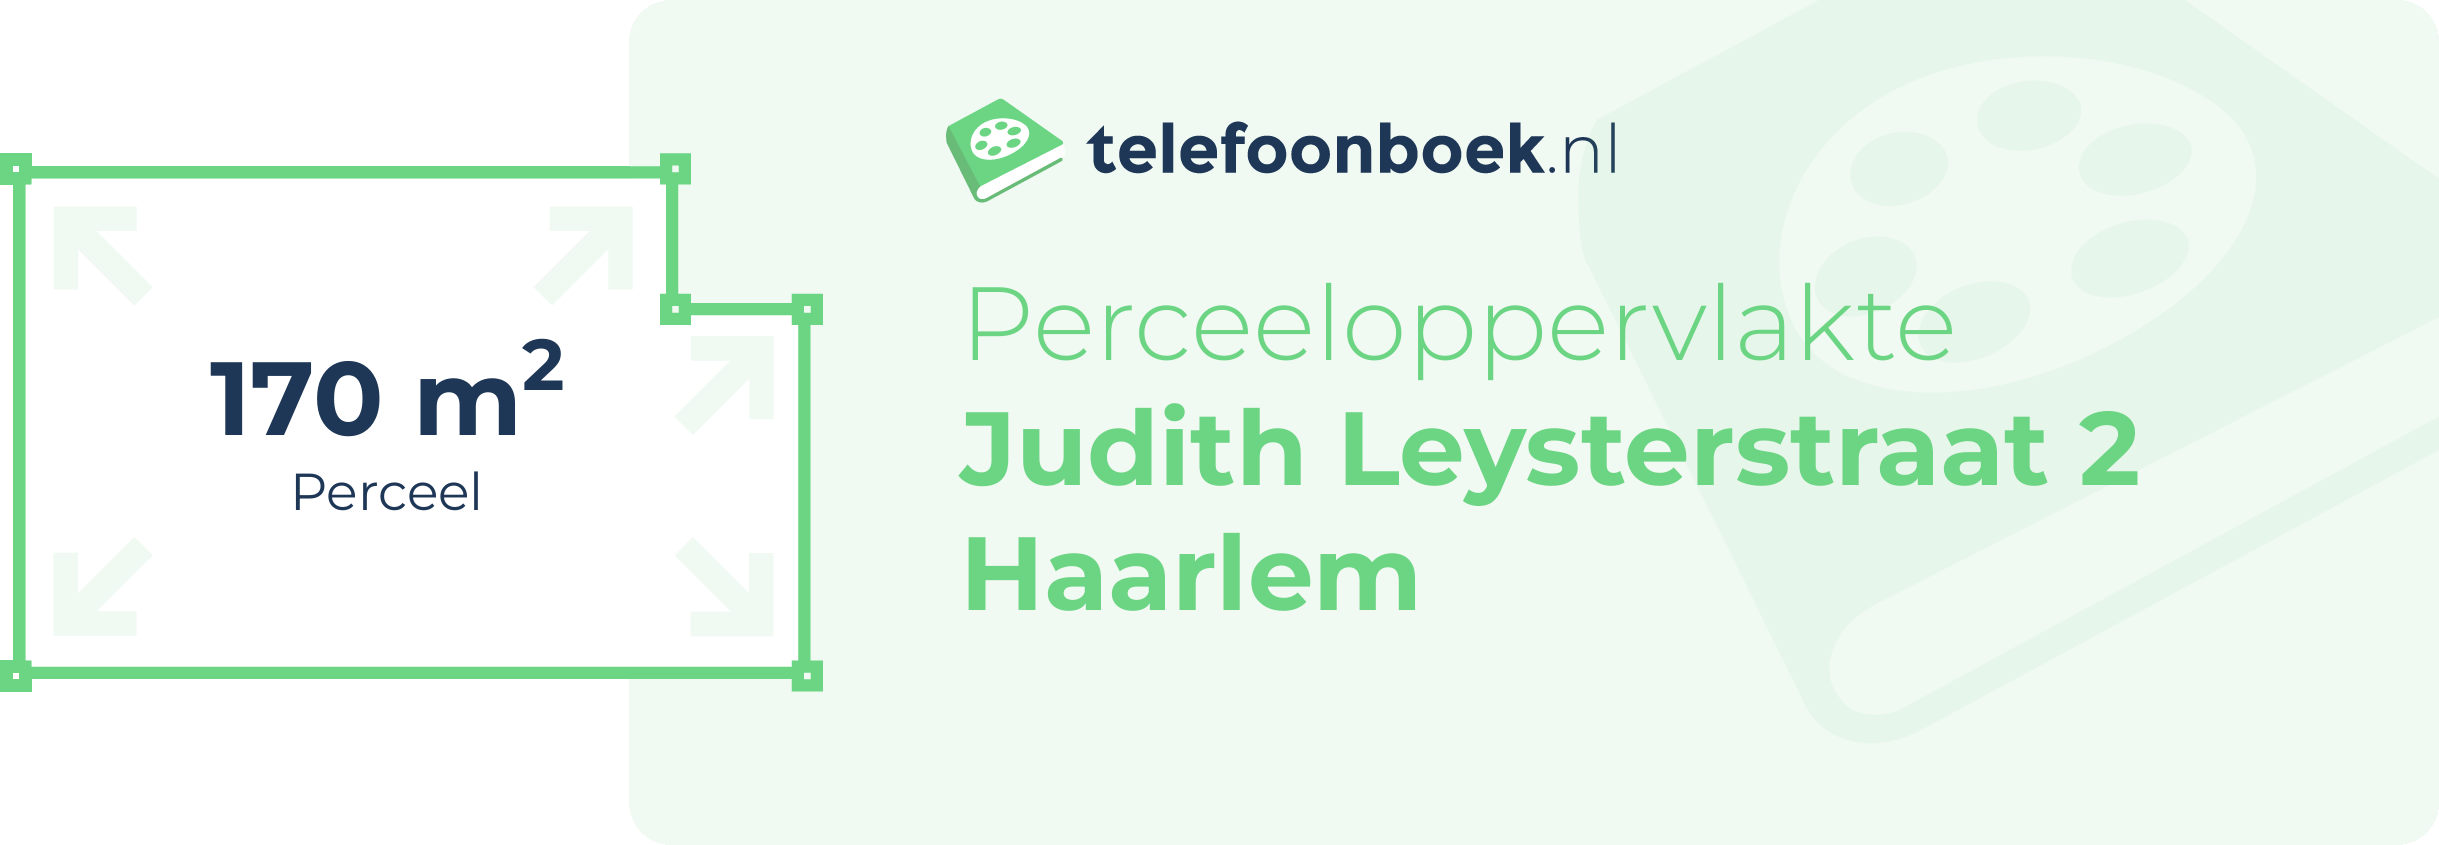 Perceeloppervlakte Judith Leysterstraat 2 Haarlem